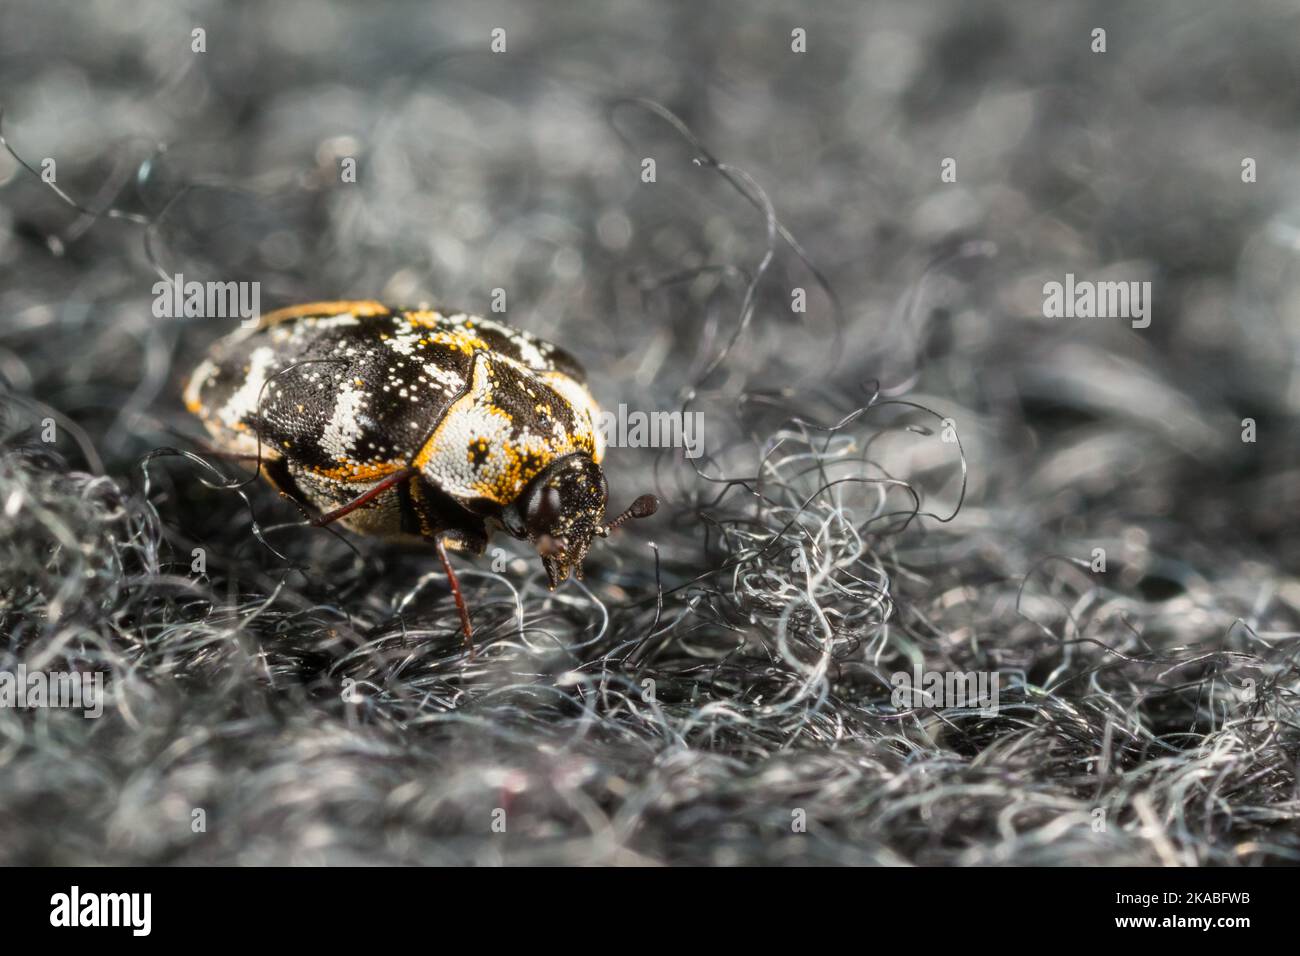 Buffalo carpet beetle (Anthrenus scrophulariae) on a carpet indoors Stock Photo